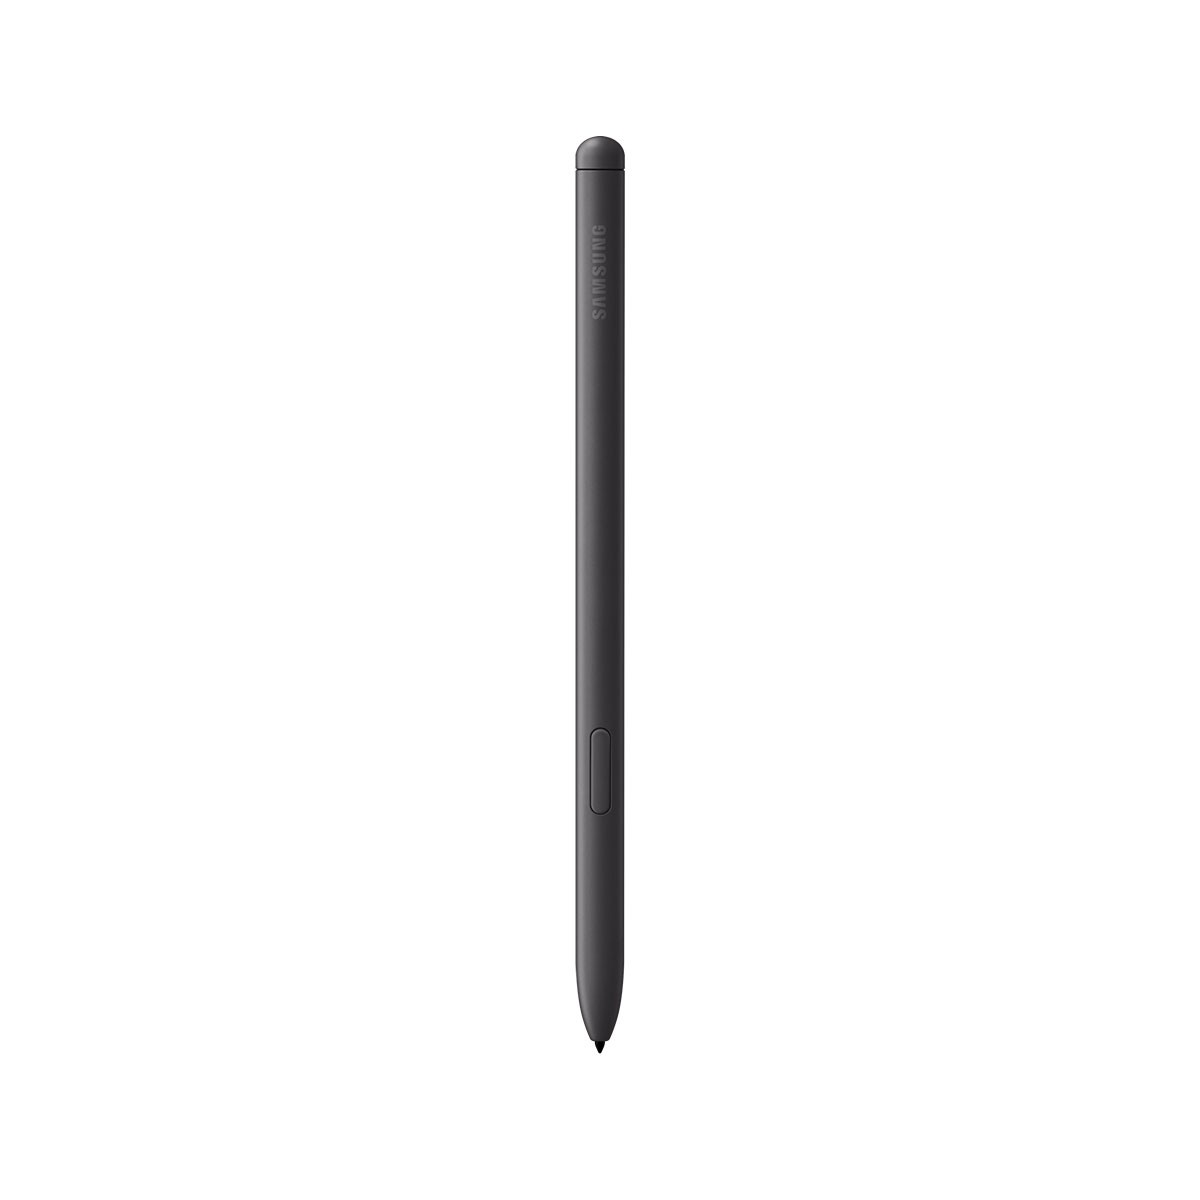  SAMSUNG Galaxy Tab S6 Lite con S Pen (64GB, 4GB) 10.4